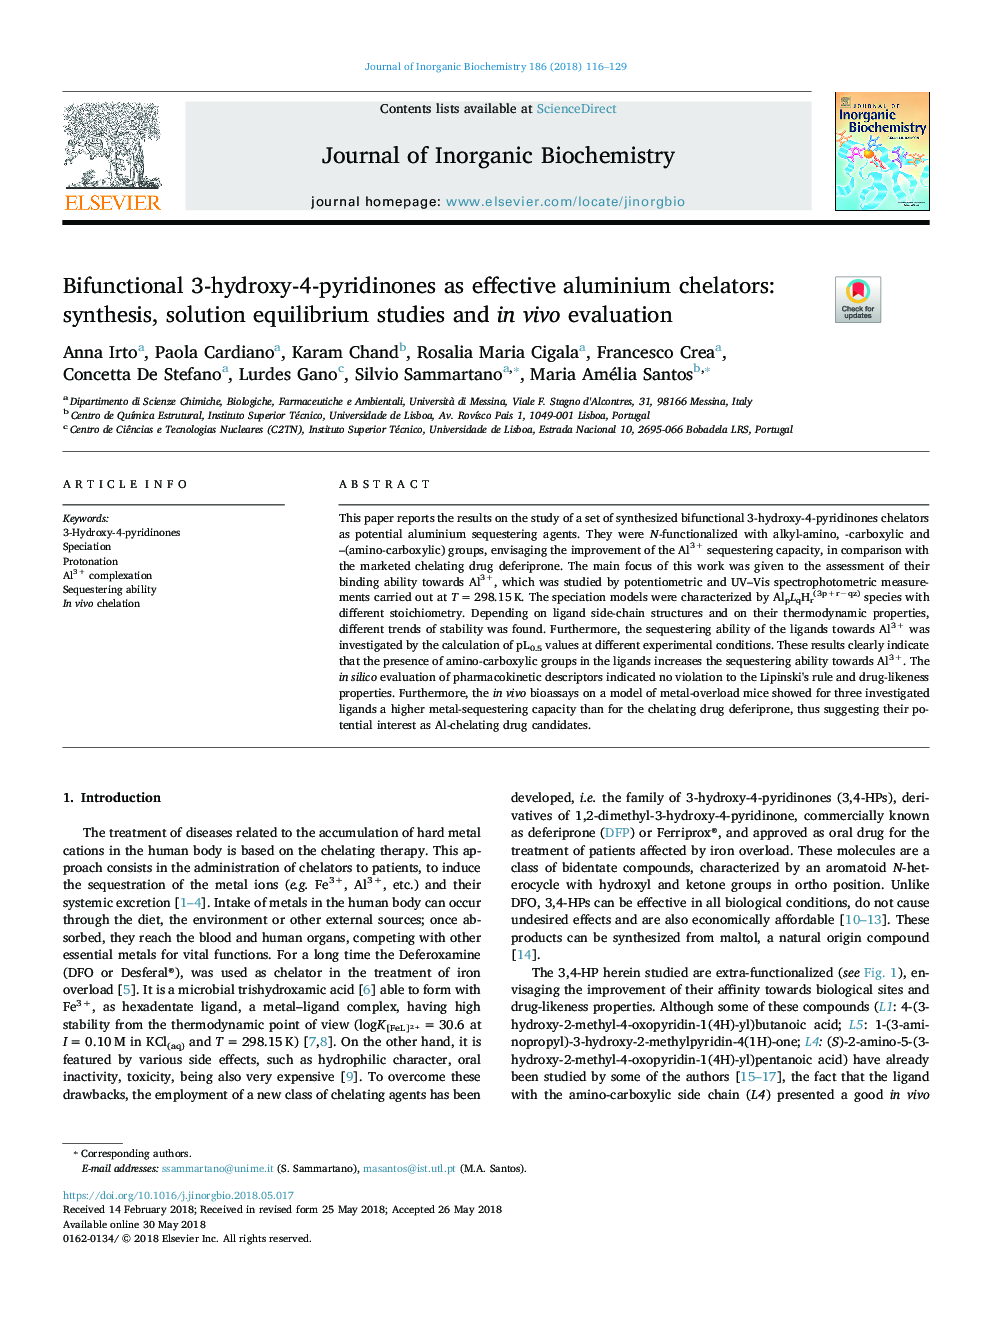 Bifunctional 3-hydroxy-4-pyridinones as effective aluminium chelators: synthesis, solution equilibrium studies and in vivo evaluation